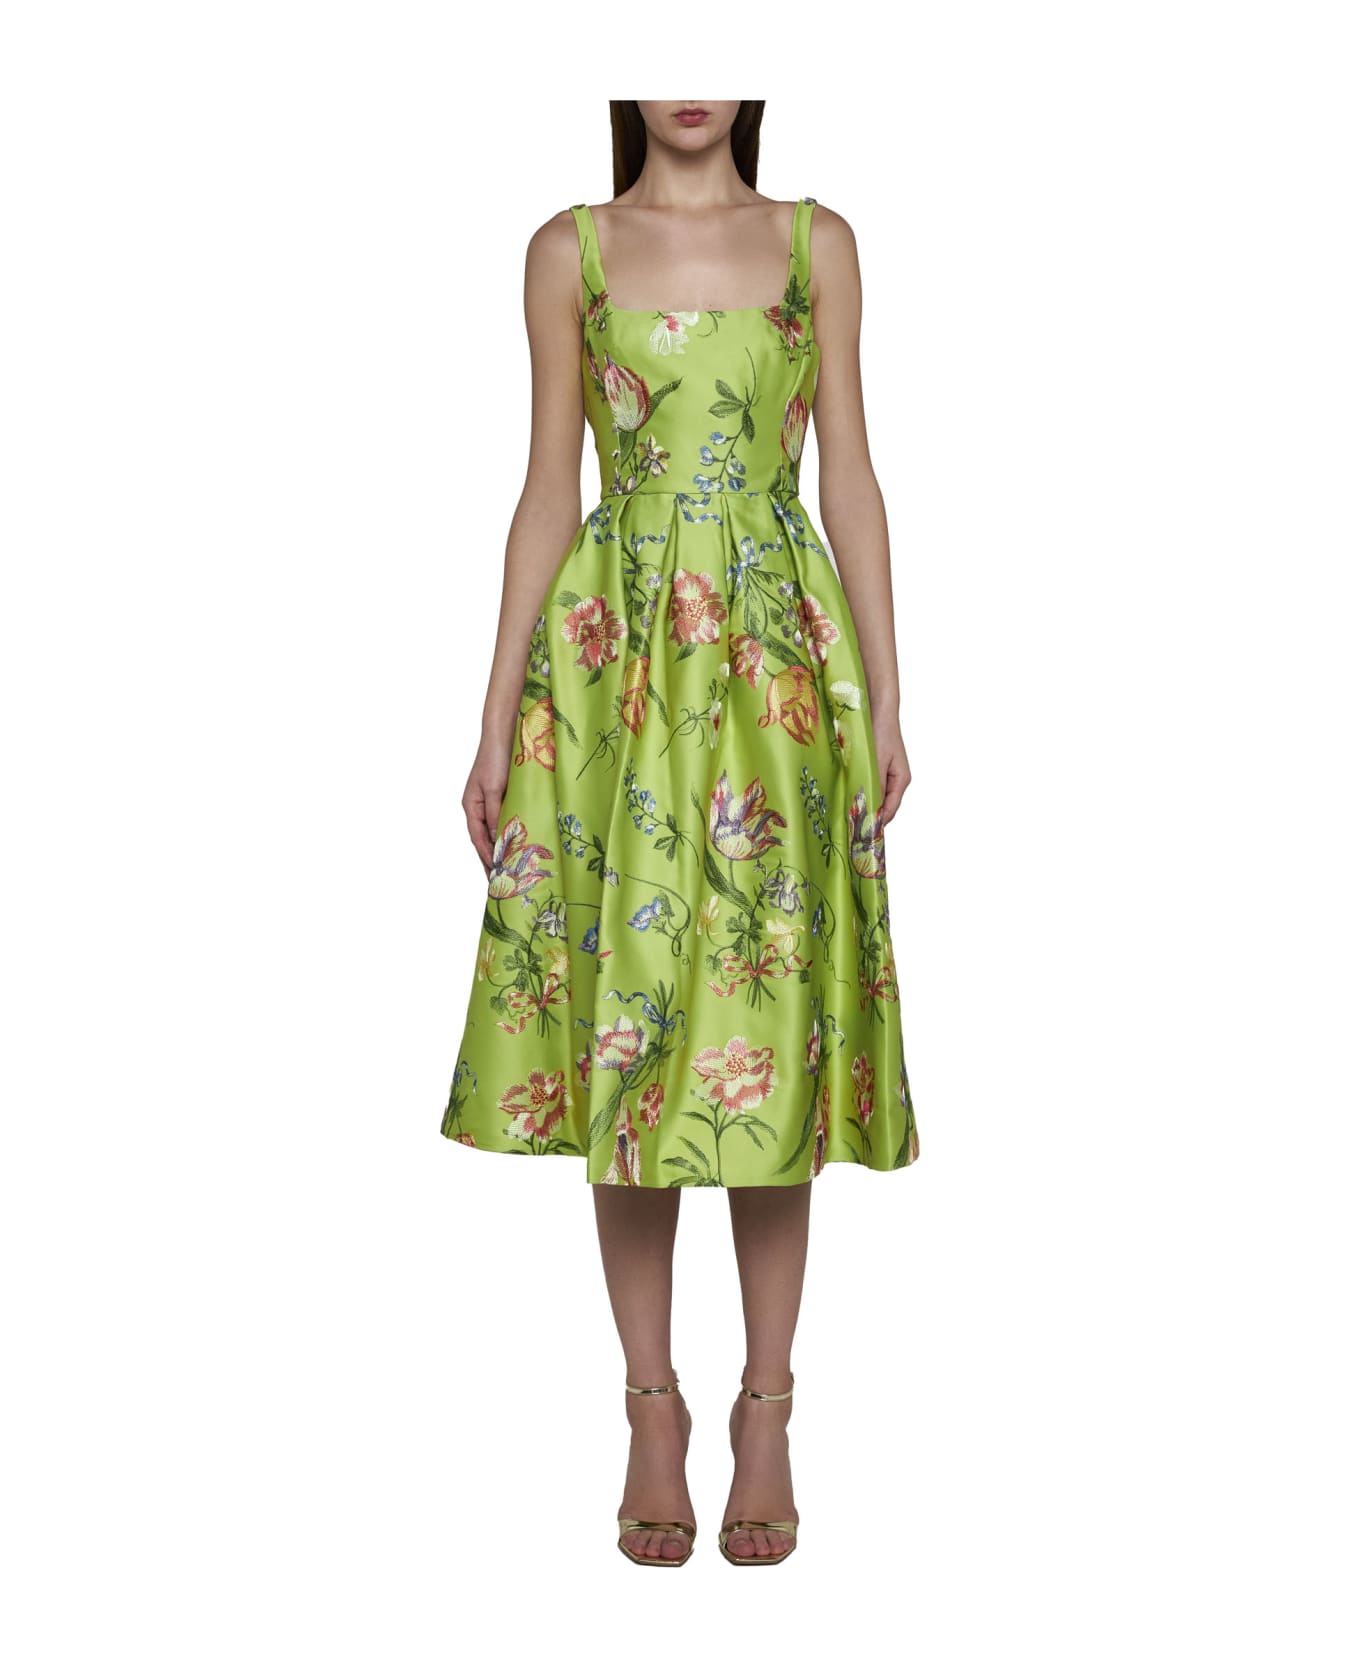 Marchesa Notte Dress - Spring green multi